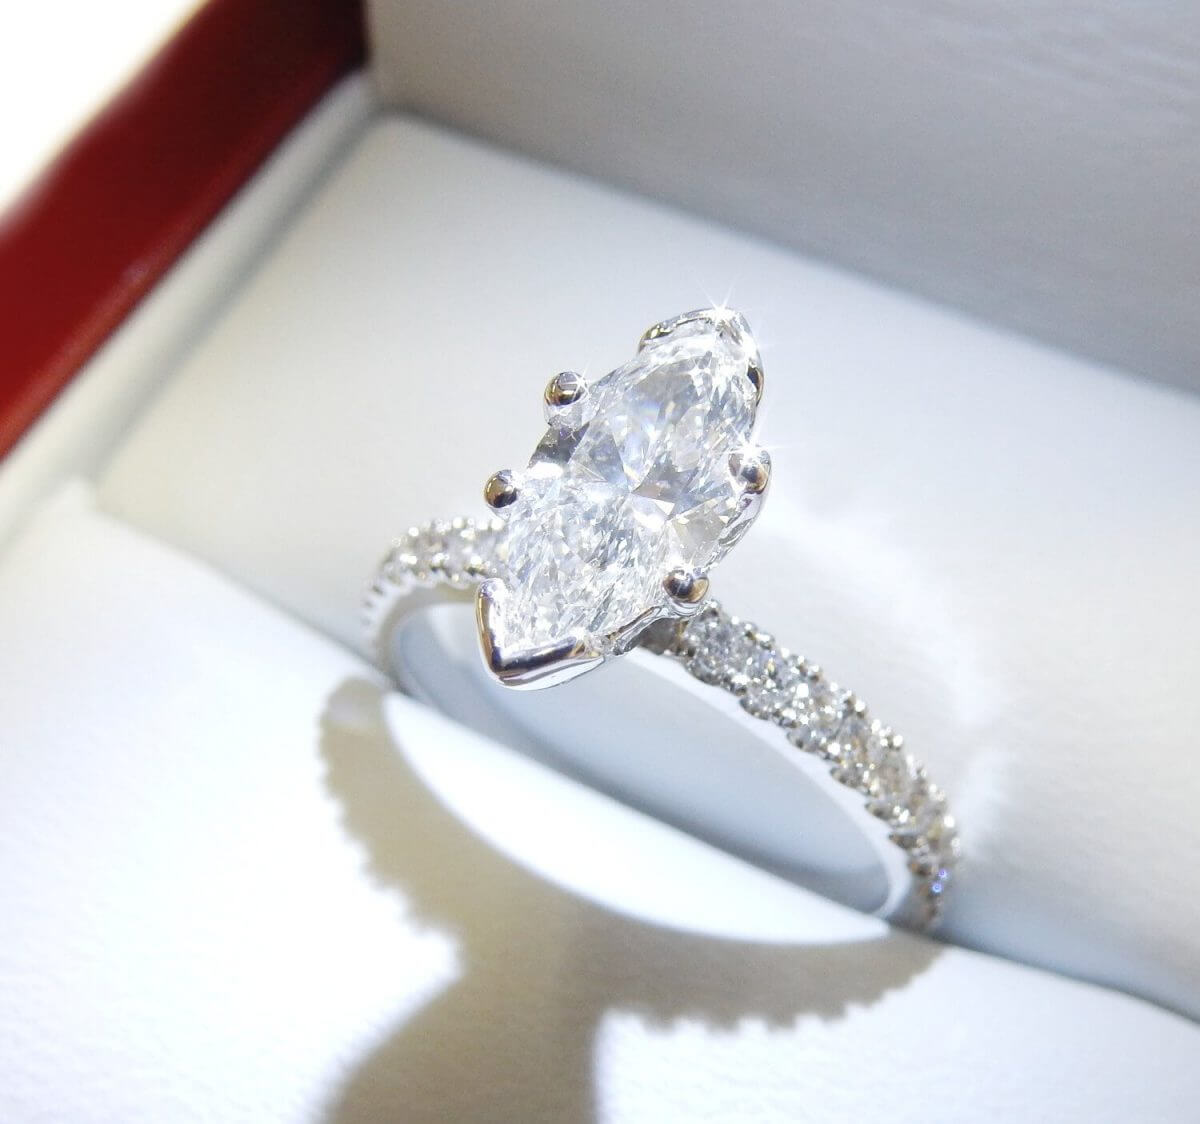 Marquise diamond engagement